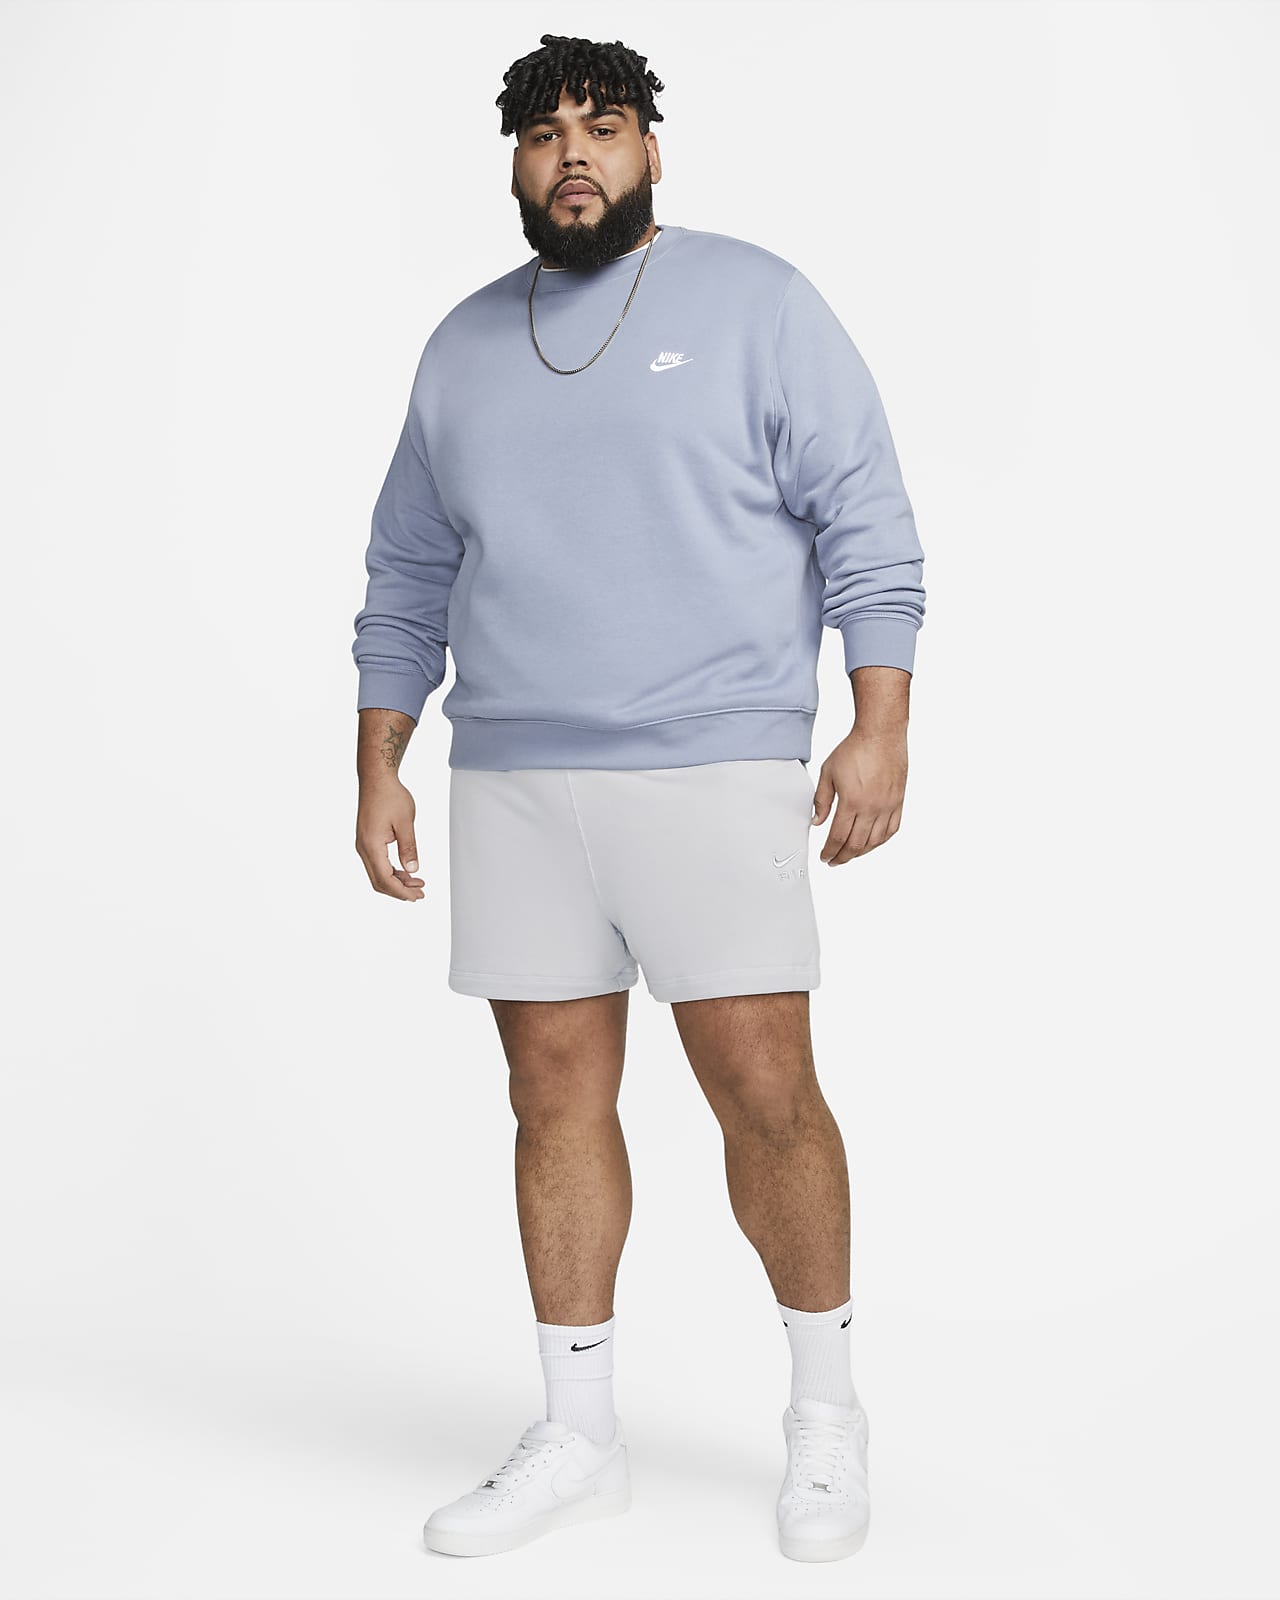 Nike Sportswear Air Men\'s Terry Shorts. French